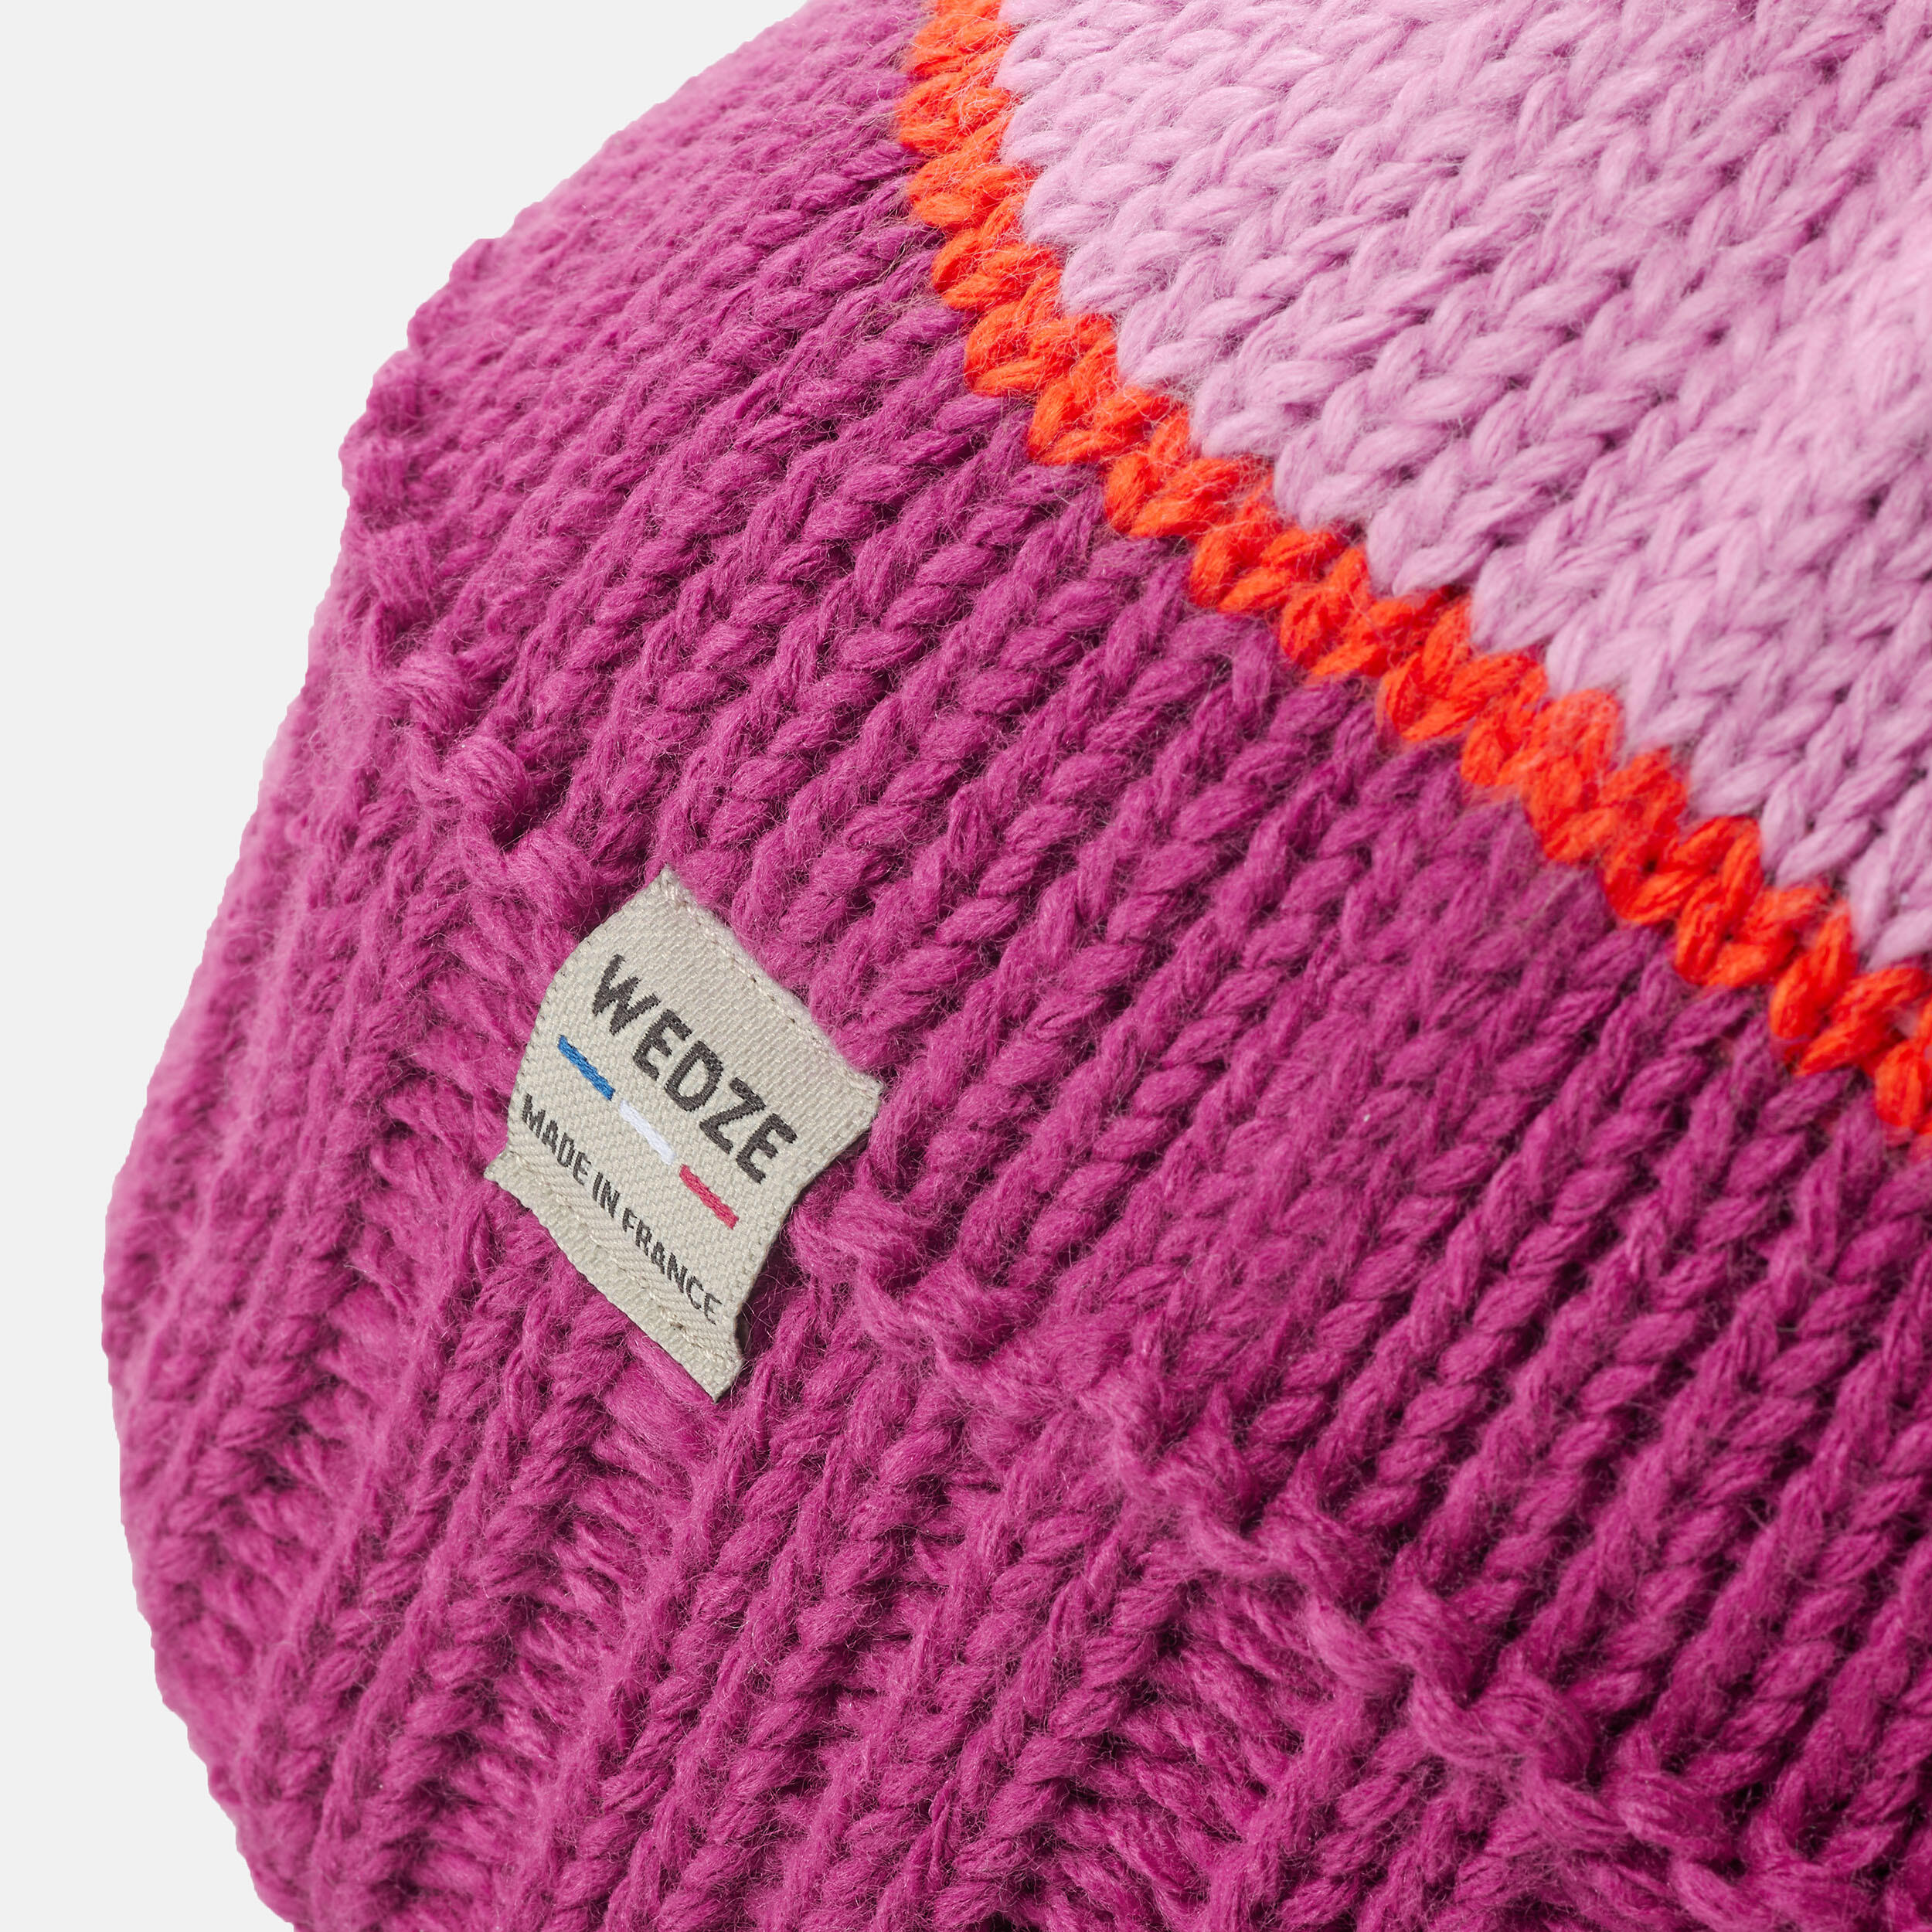 Kids’ Ski Hat Grand Nord Made in France - Pink 4/7